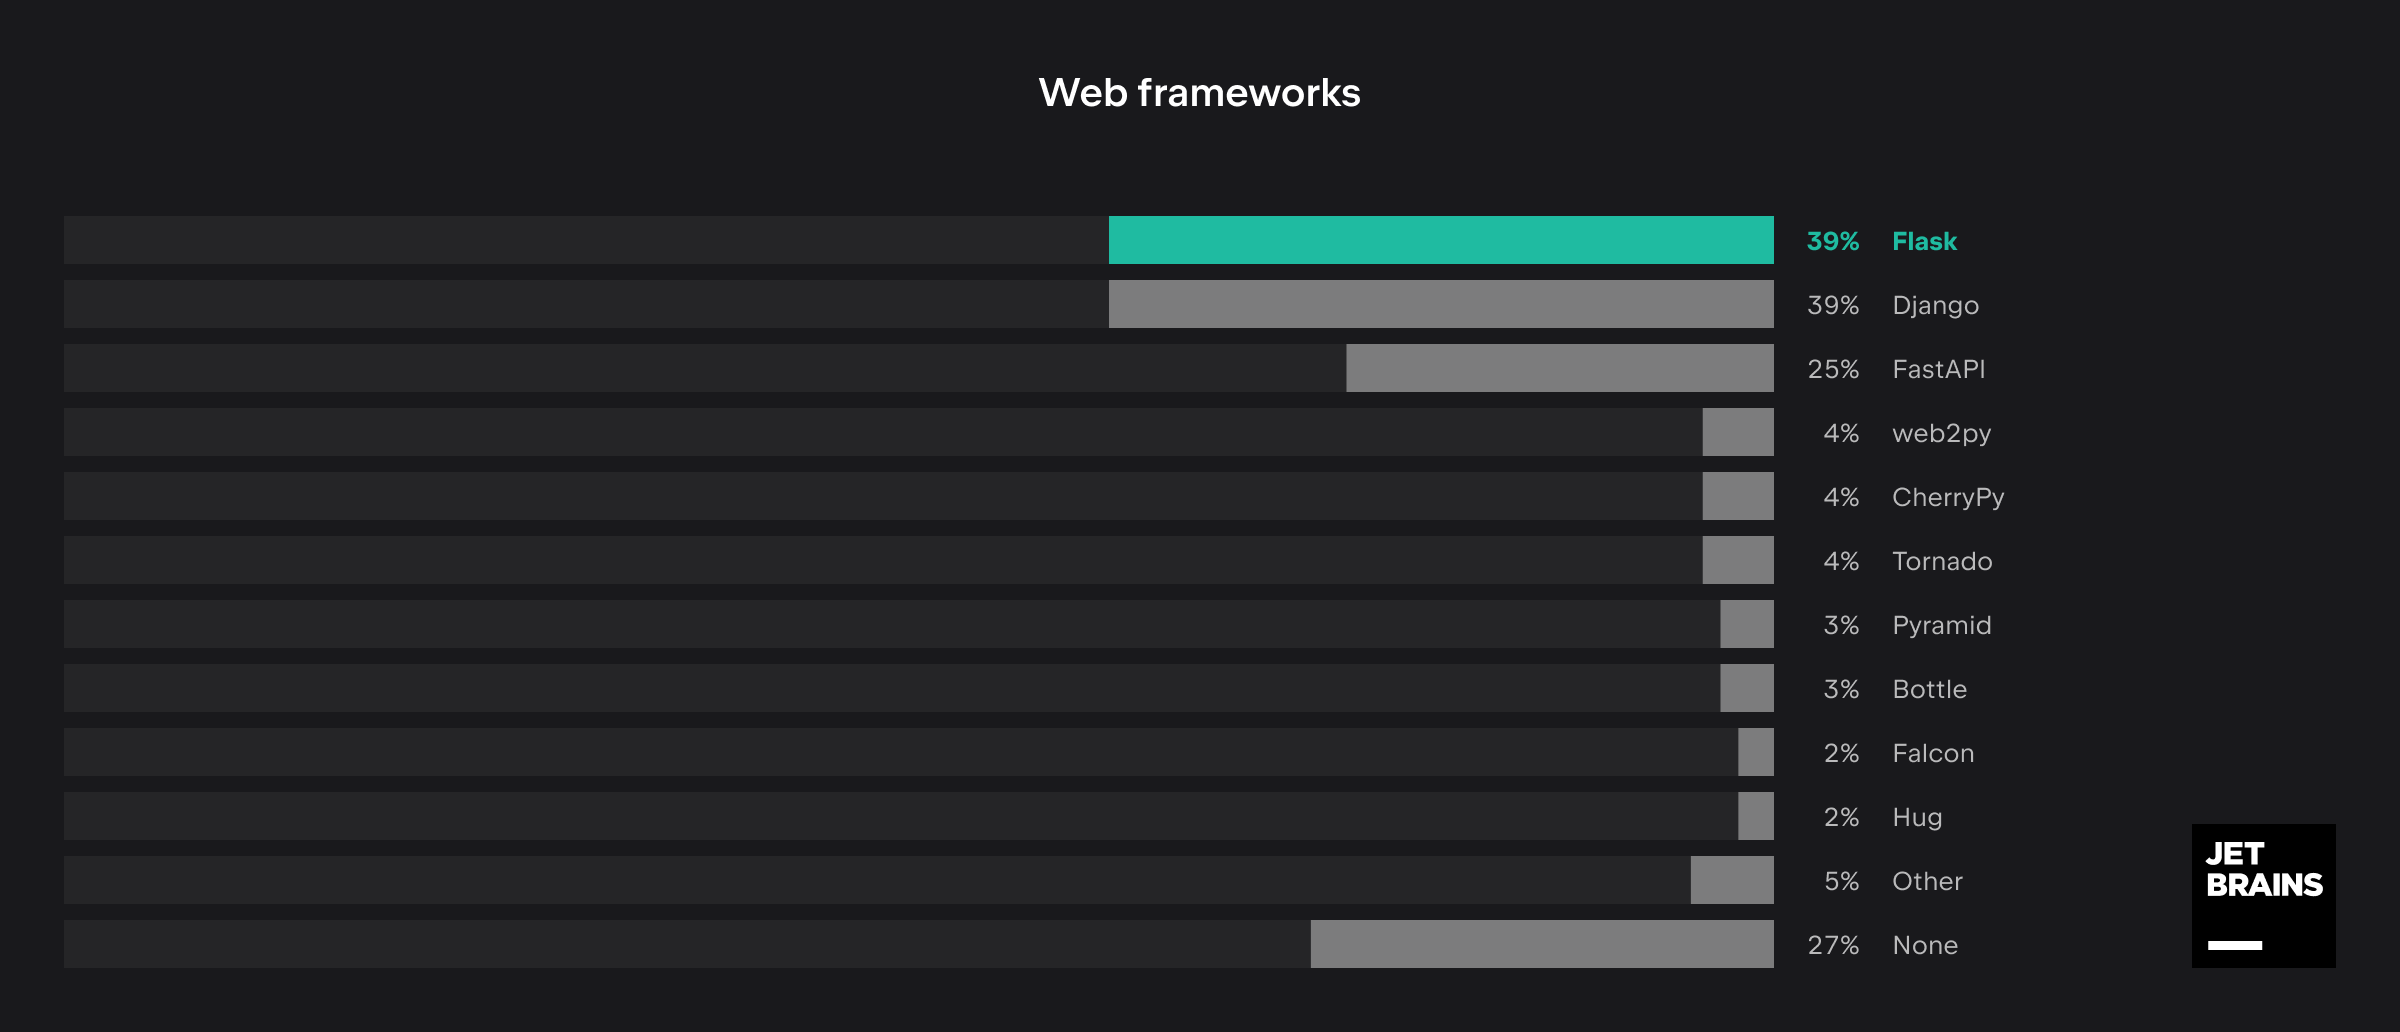 Web frameworks by popularity among Python developers